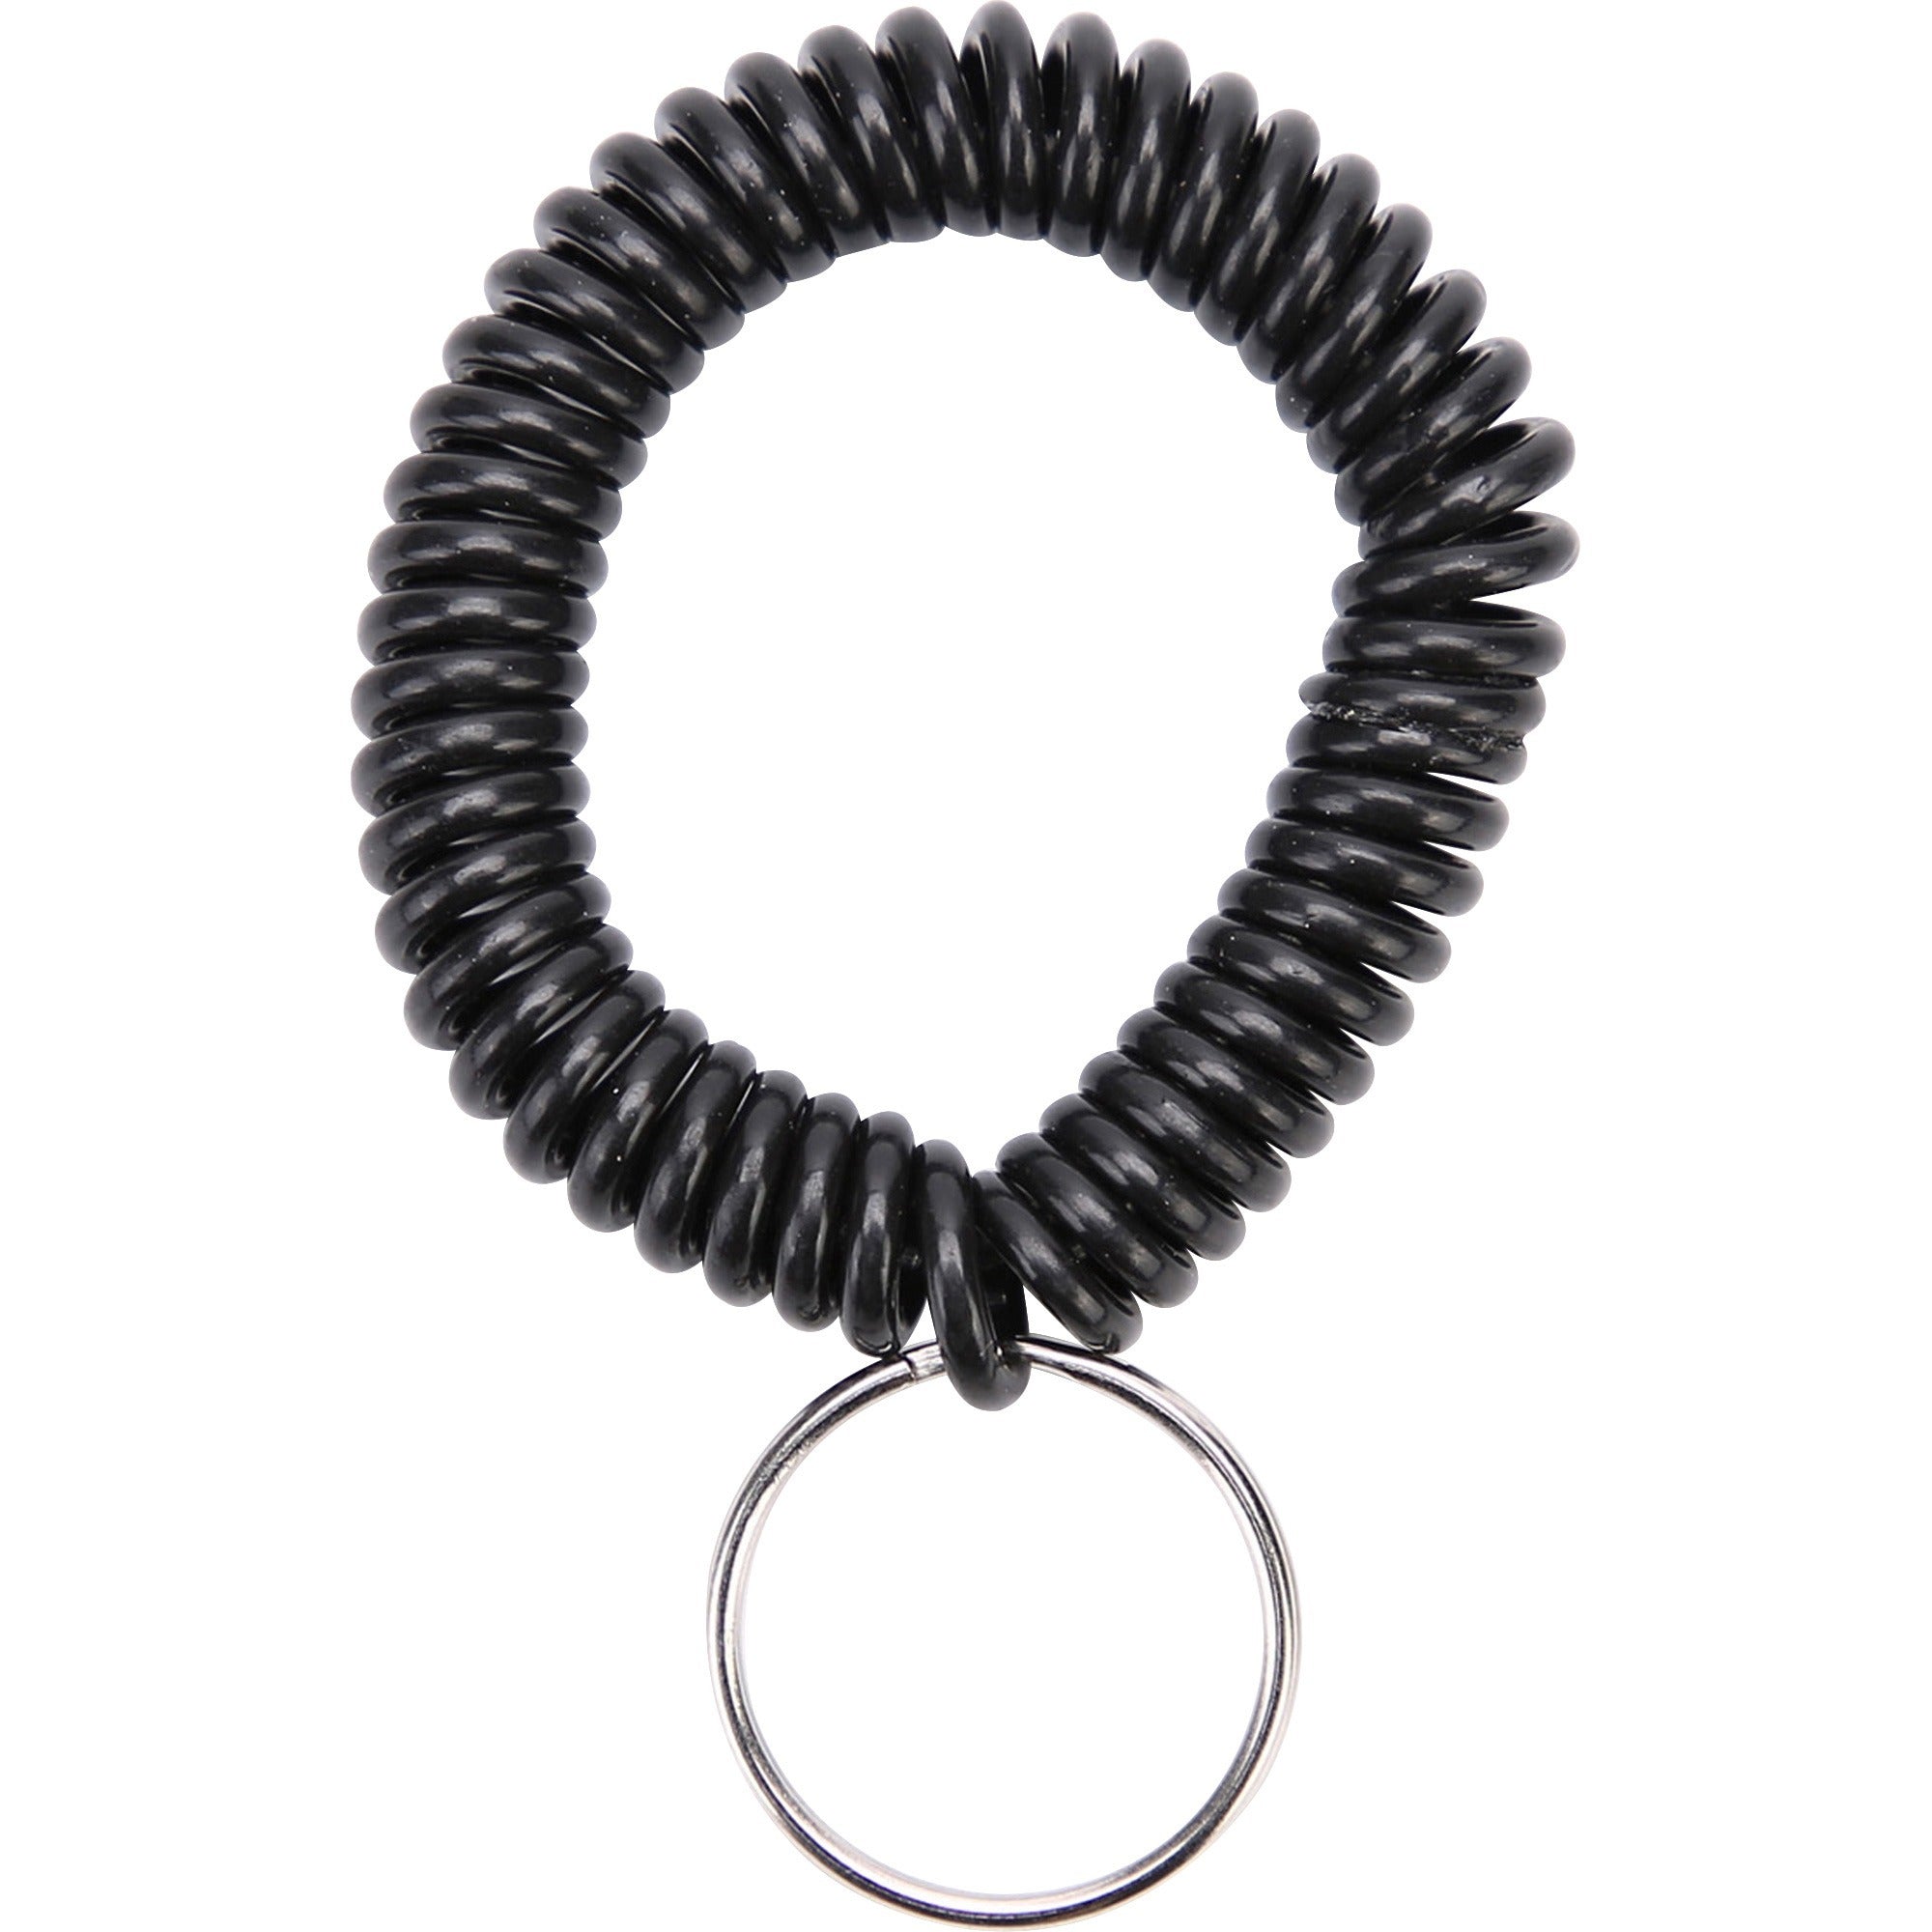 sparco-split-ring-wrist-coil-key-holders-21-x-21-x-24-6-pack-black_spr02882 - 1